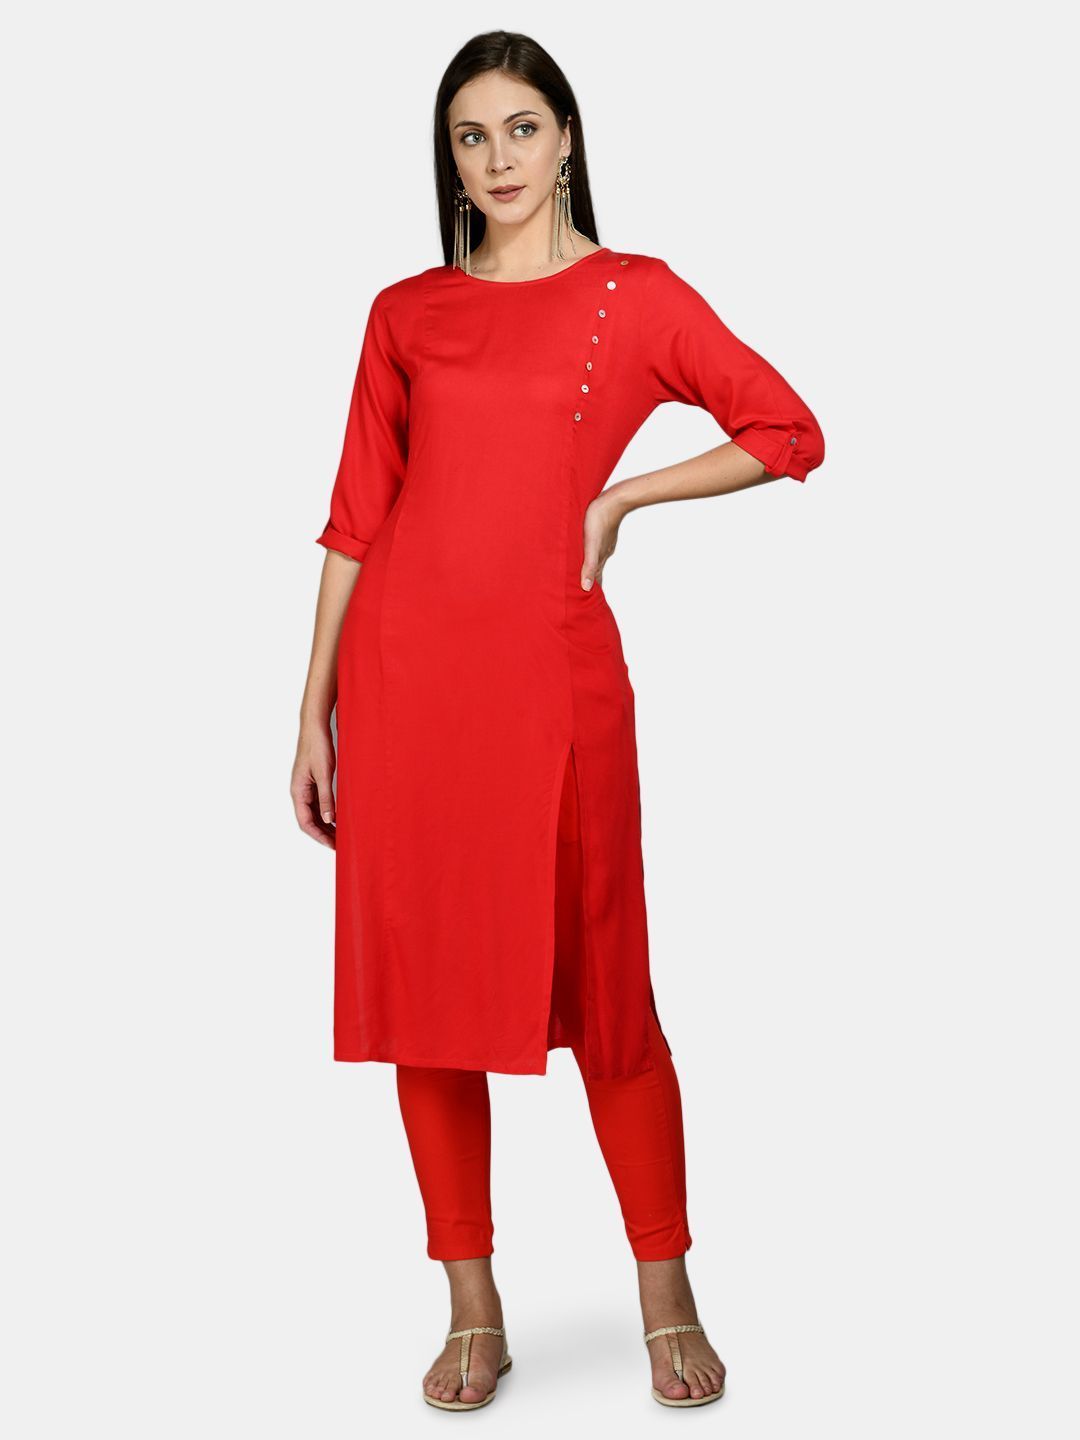 Women's Red Cotton Solid 3/4 Sleeve Round Neck Casual Kurta Pant Dupatta Set - Myshka